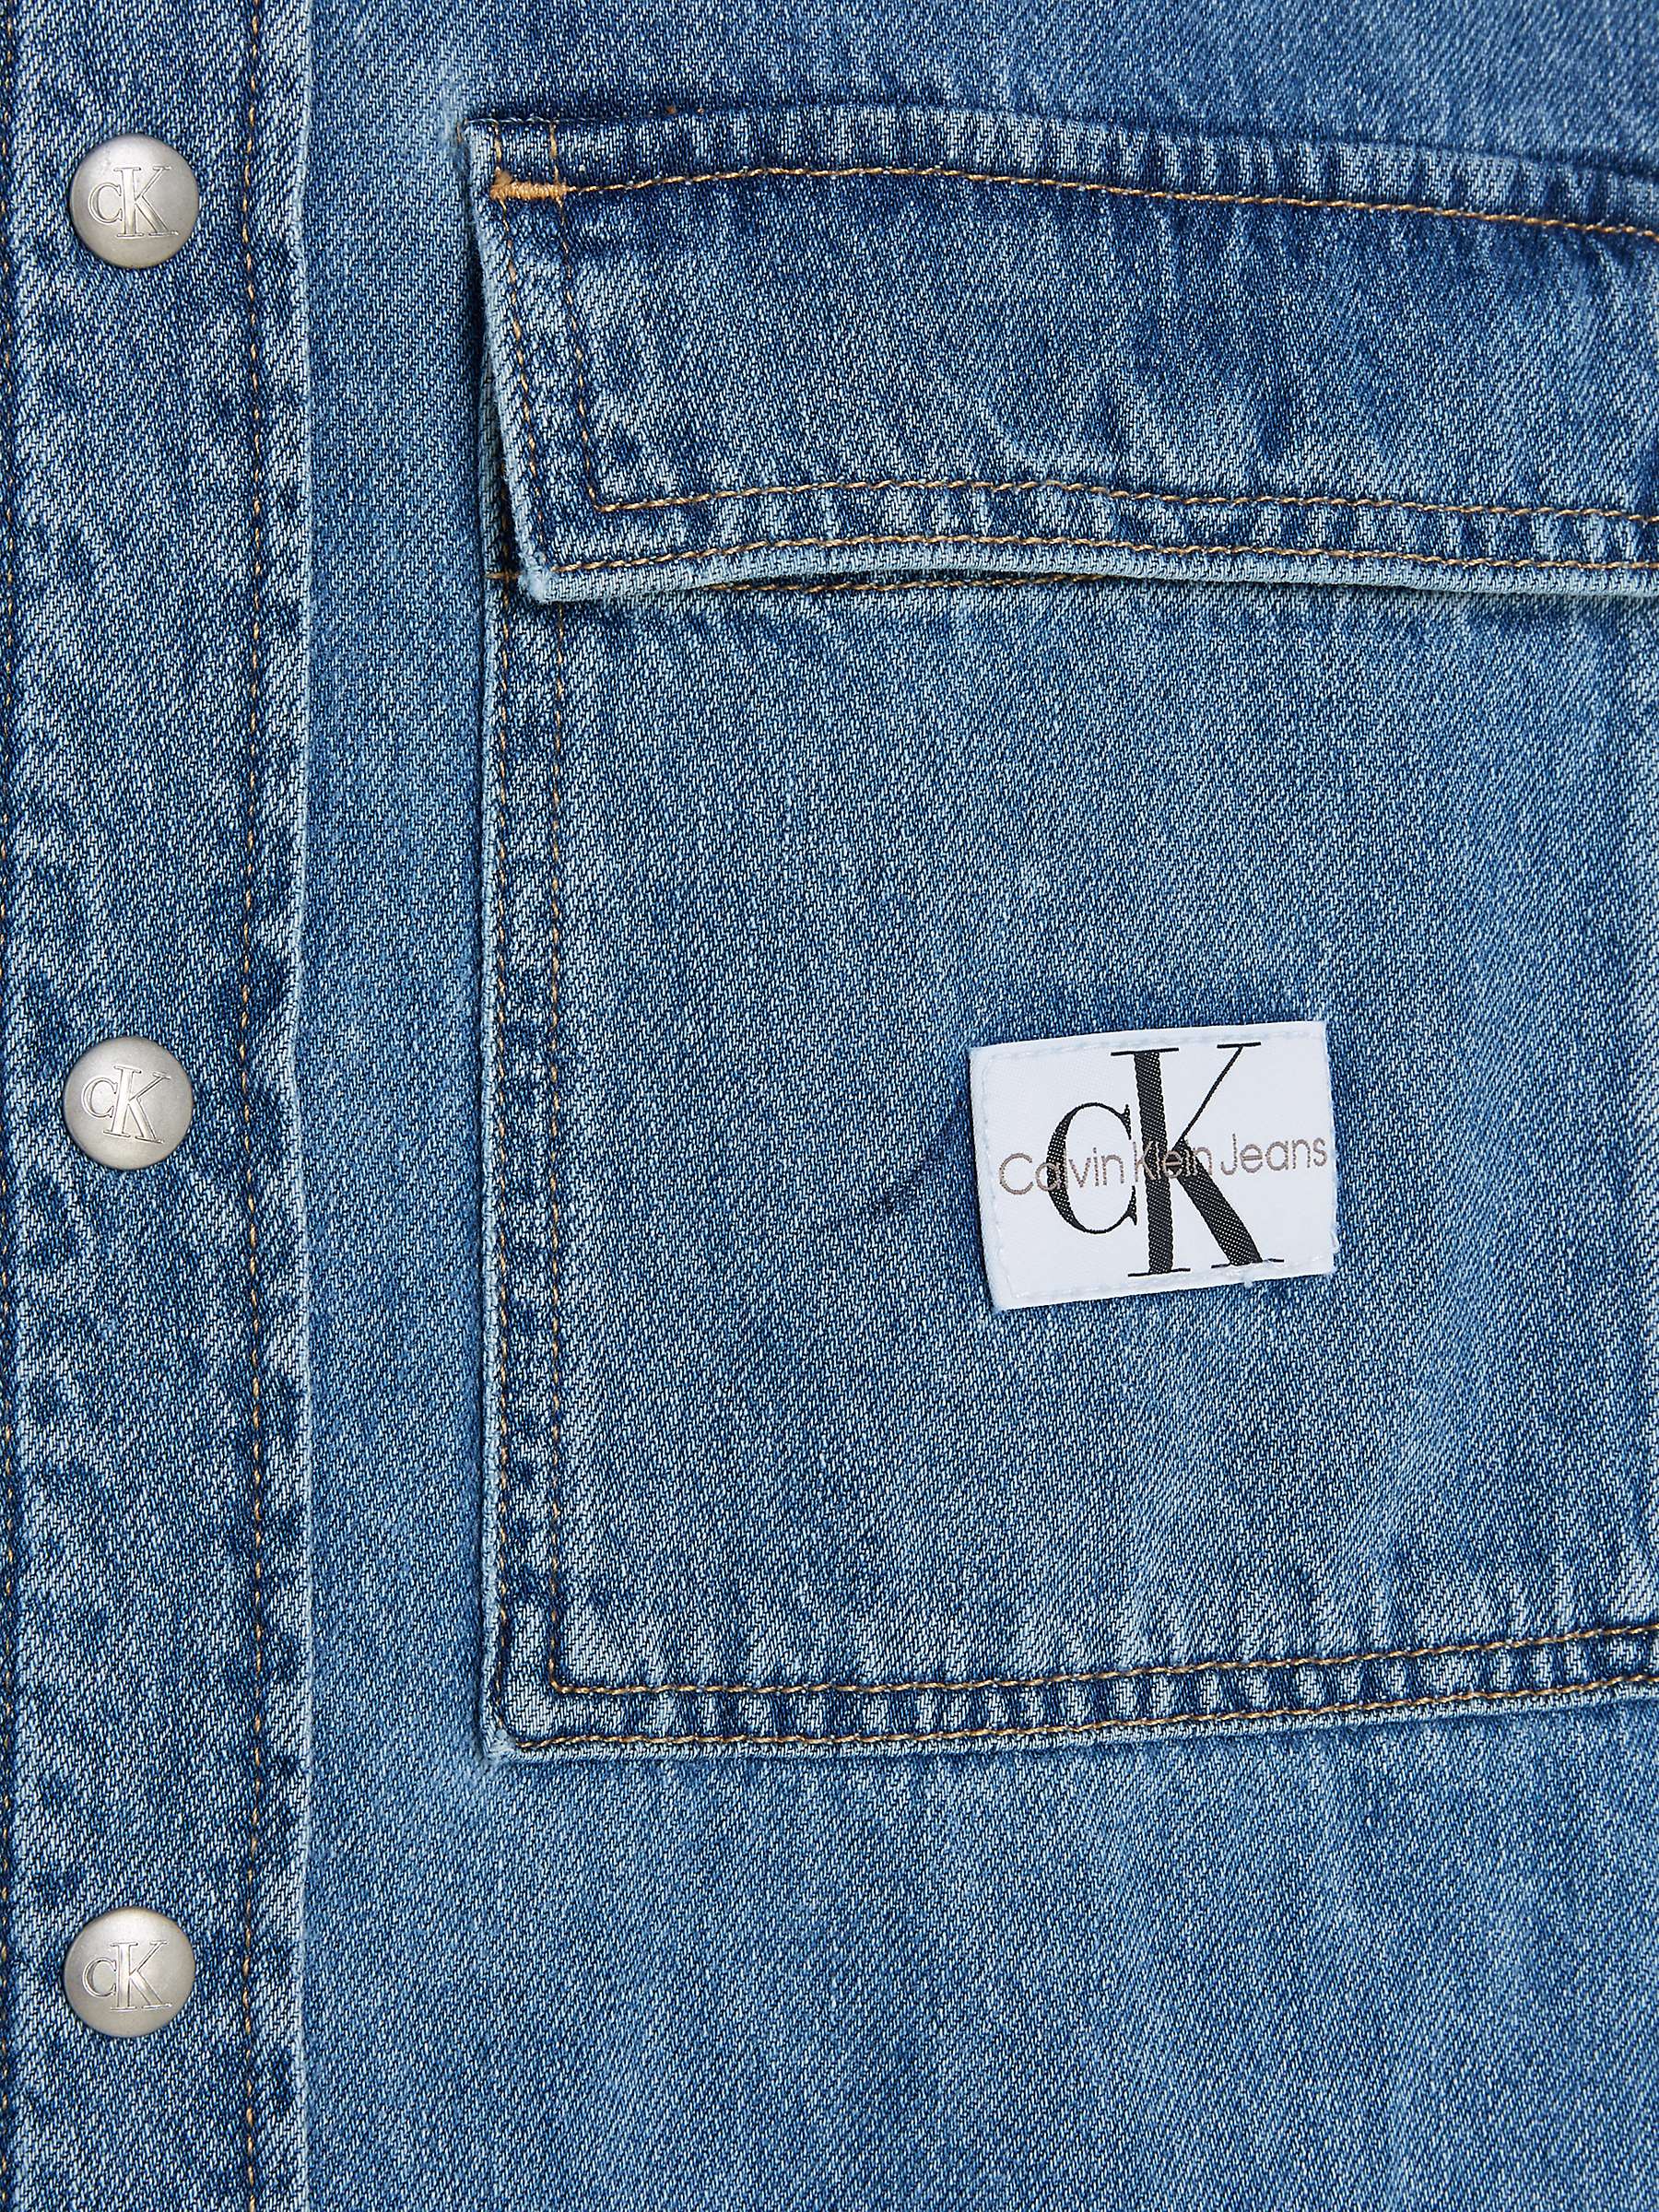 Buy Calvin Klein Jeans Relaxed Denim Shirt, Denim Blue Online at johnlewis.com